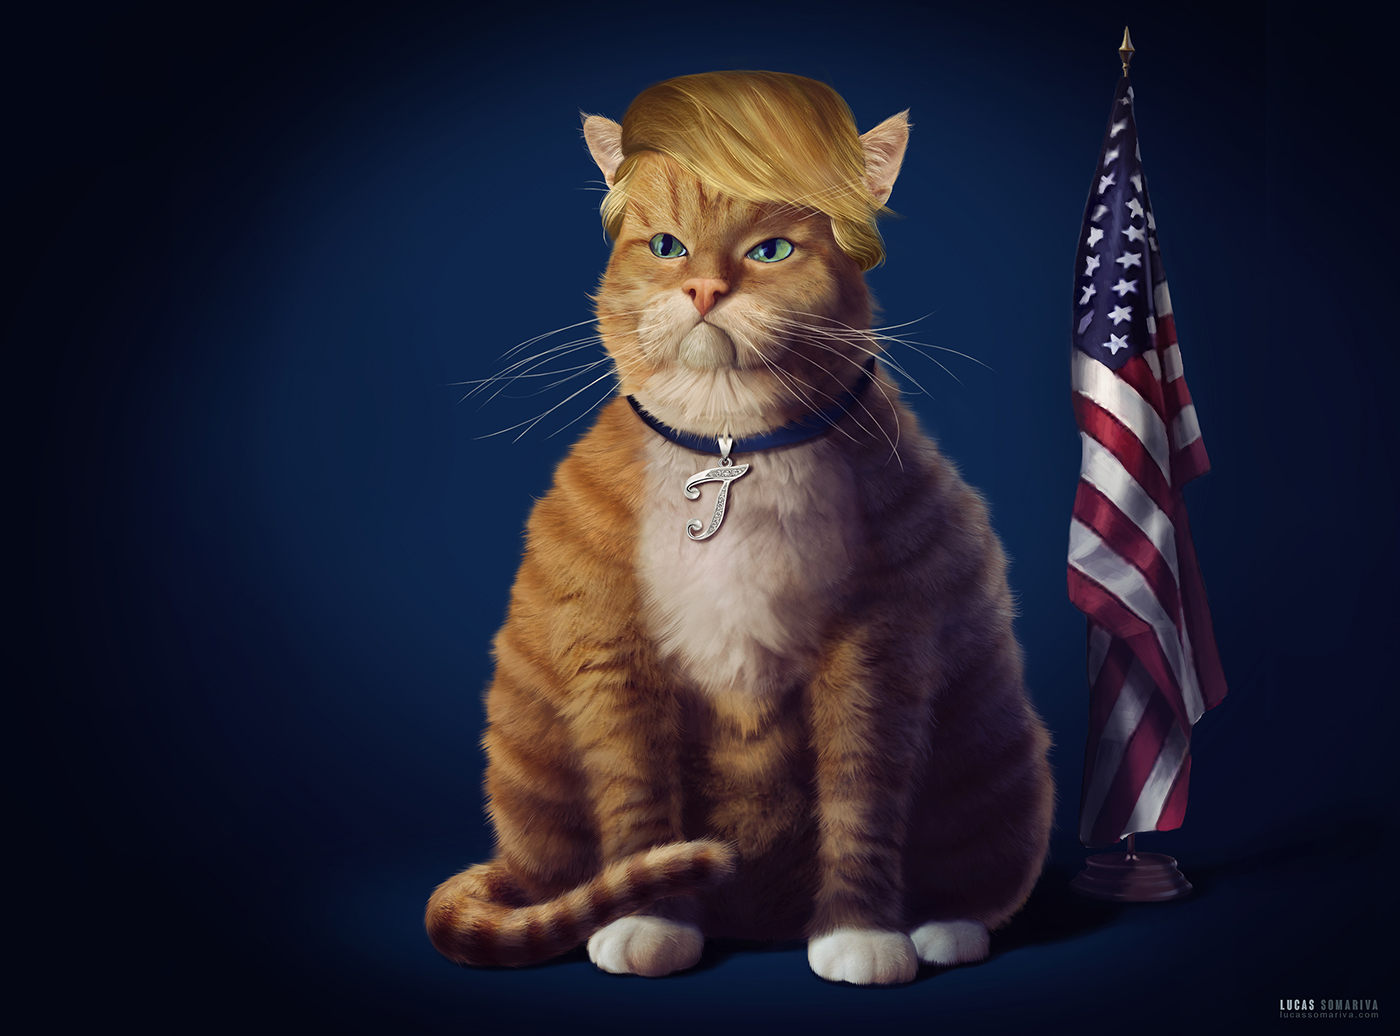  Fat Cat  Trump on Behance